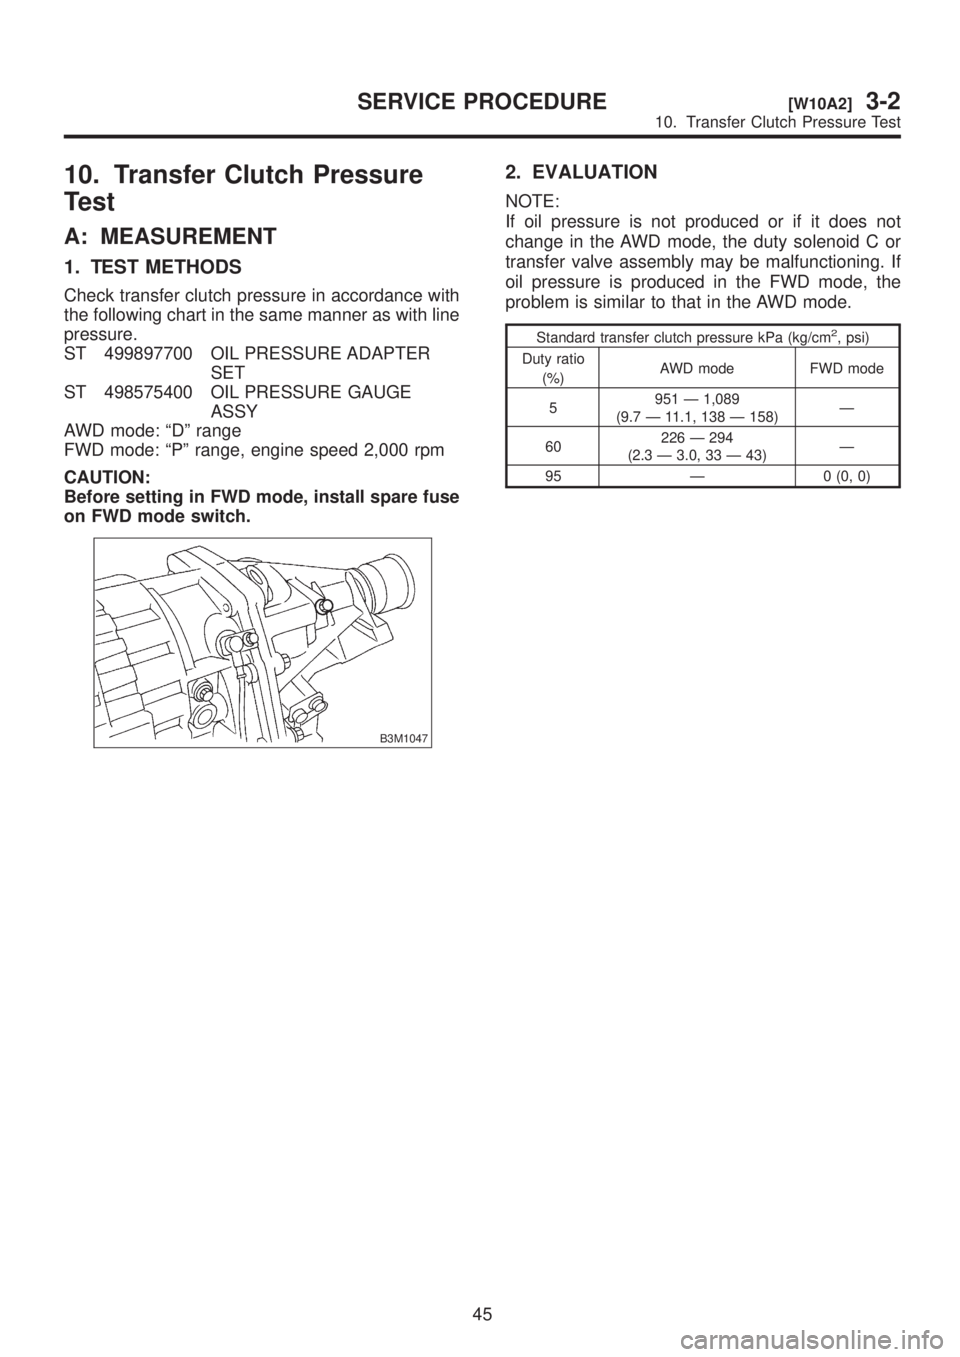 SUBARU LEGACY 1999  Service Repair Manual 10. Transfer Clutch Pressure
Test
A: MEASUREMENT
1. TEST METHODS
Check transfer clutch pressure in accordance with
the following chart in the same manner as with line
pressure.
ST 499897700 OIL PRESSU